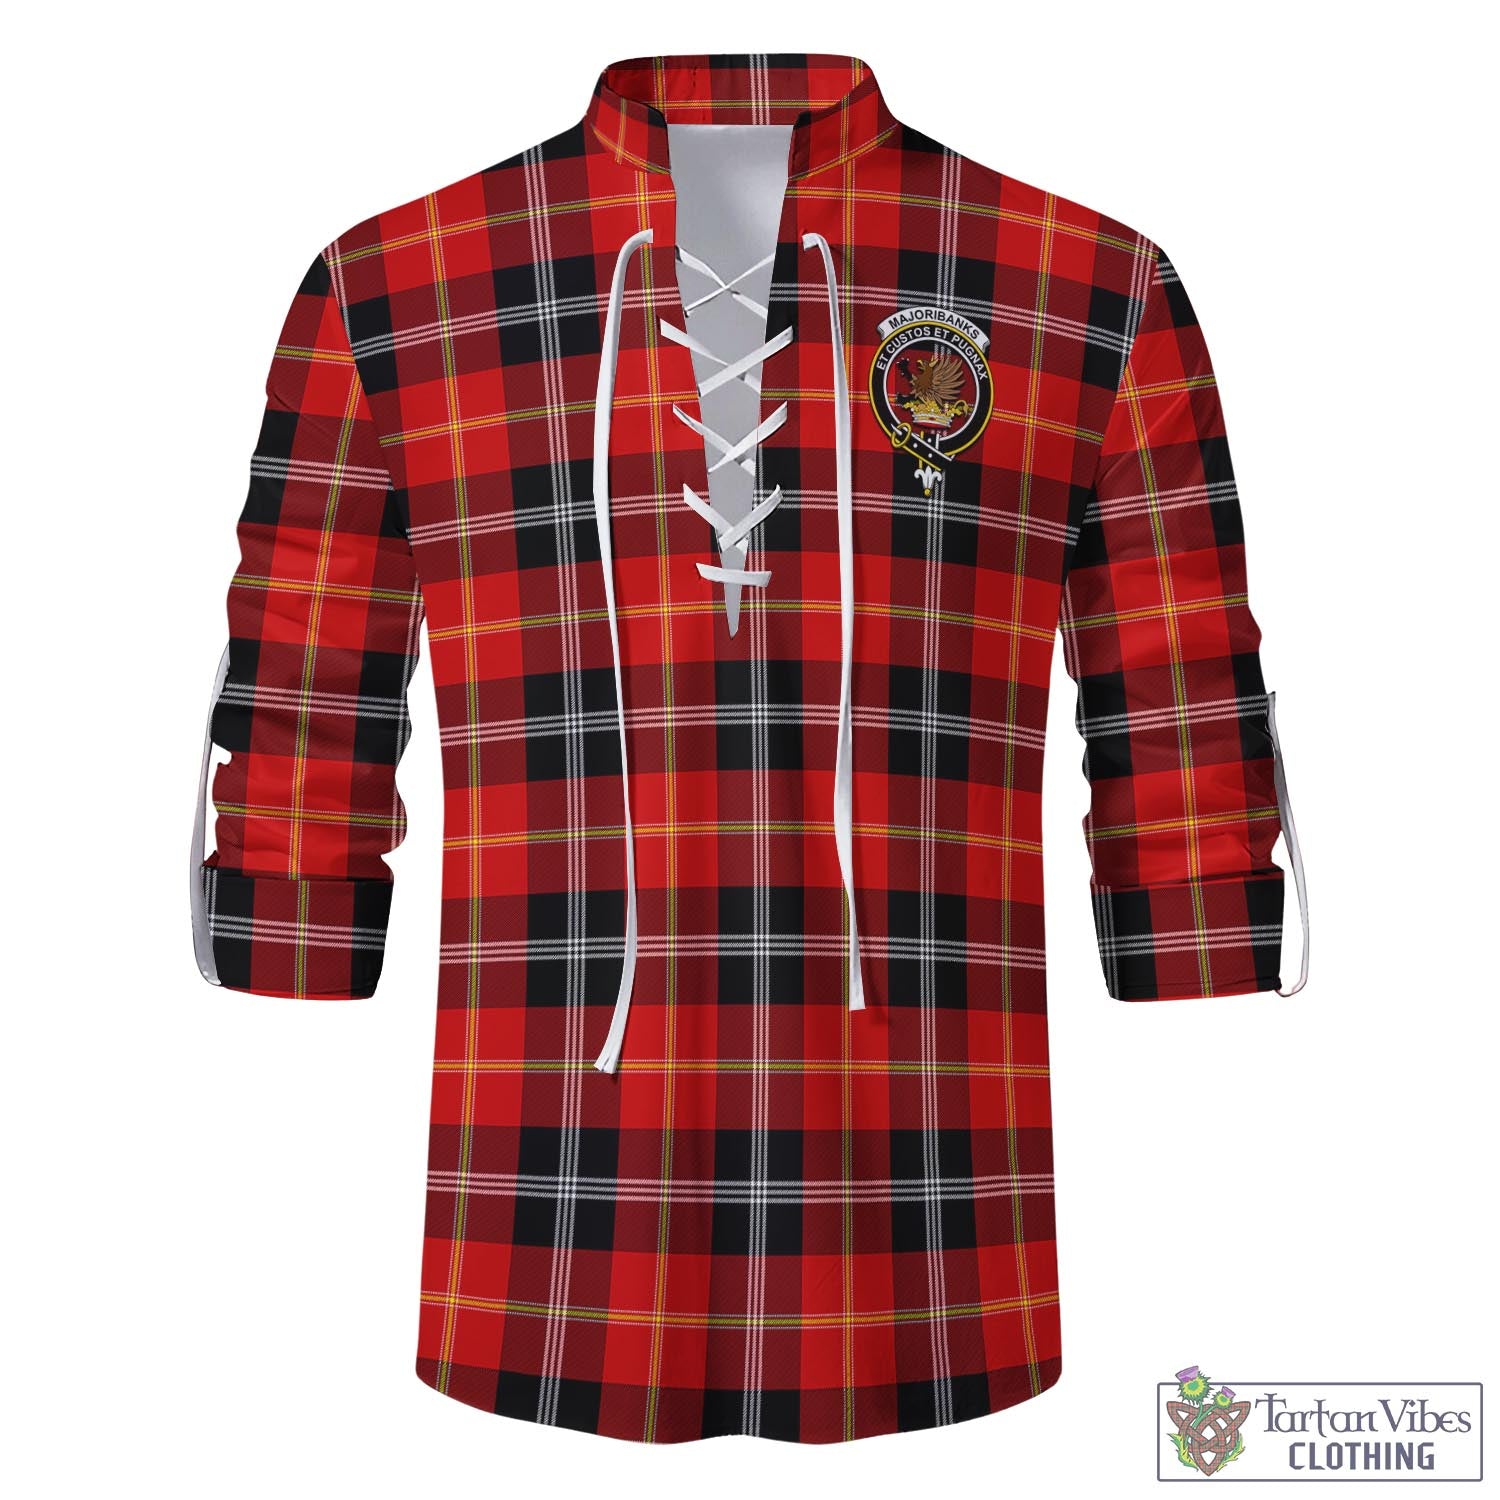 Tartan Vibes Clothing Majoribanks Tartan Men's Scottish Traditional Jacobite Ghillie Kilt Shirt with Family Crest